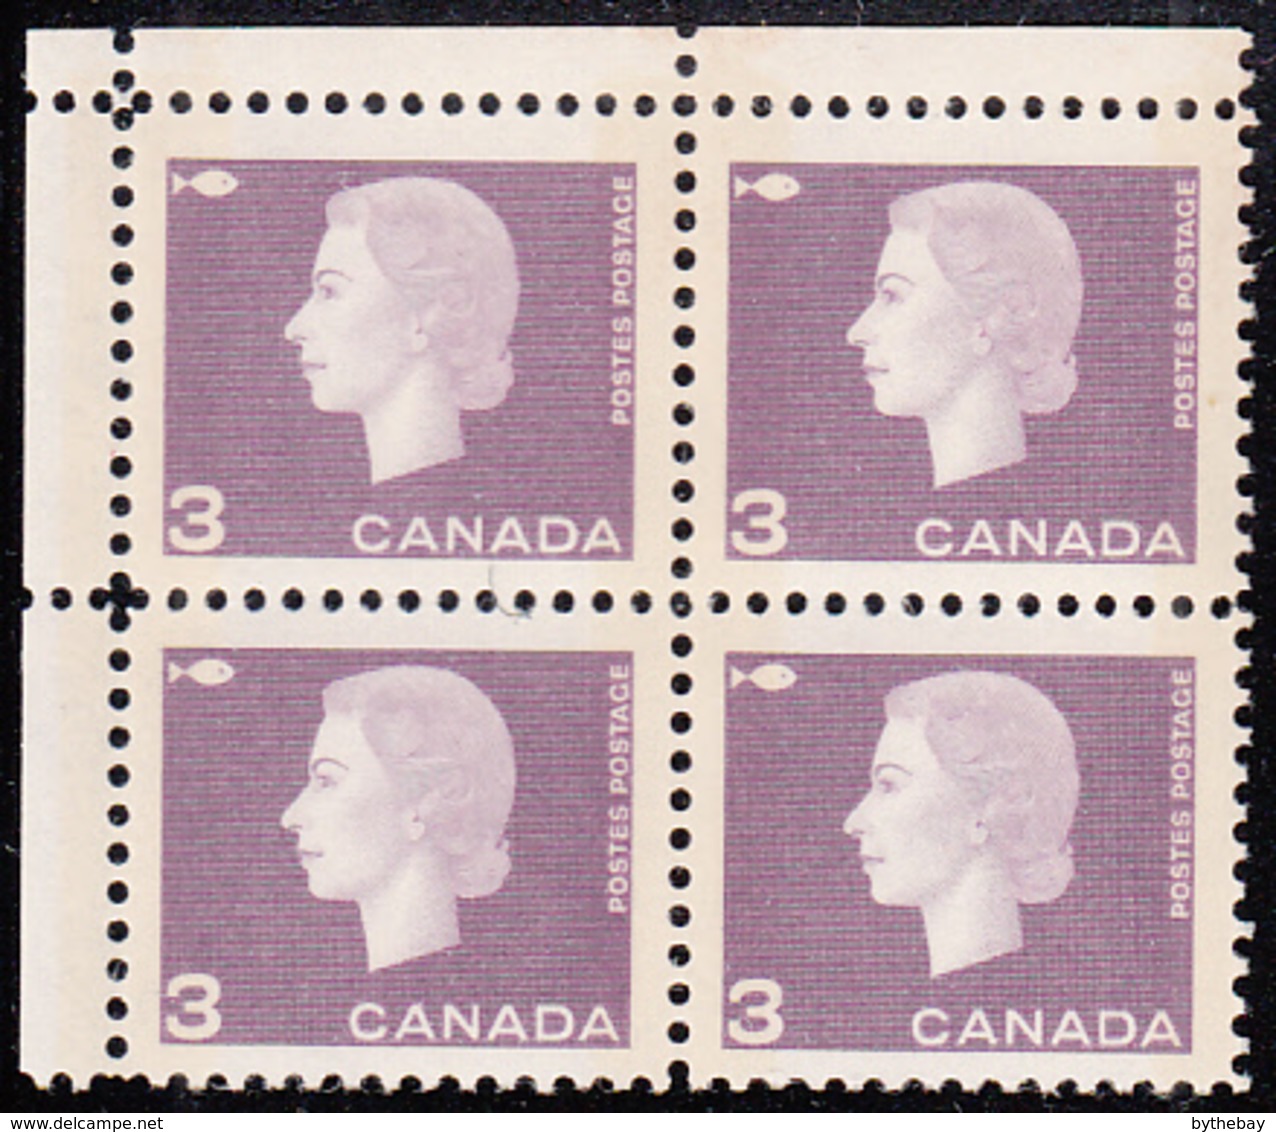 Canada 1963 MNH Sc #403p 3c QEII Cameo Purple W2B Narrow Selvedge UL - Num. Planches & Inscriptions Marge